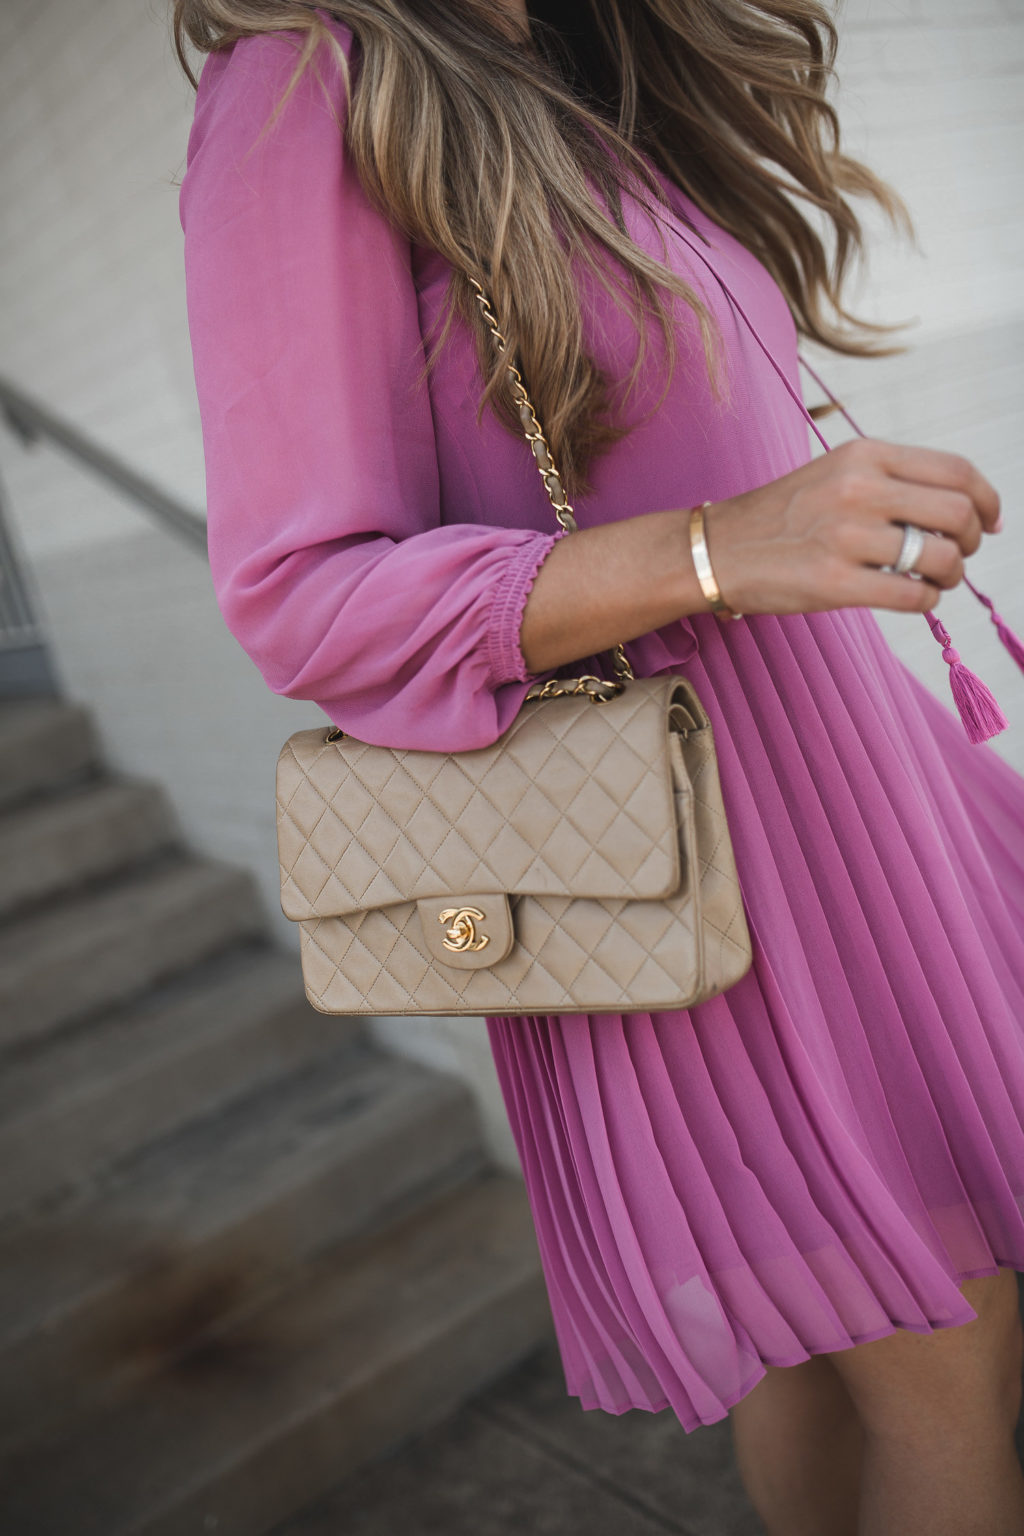 chanel bag and pink dress